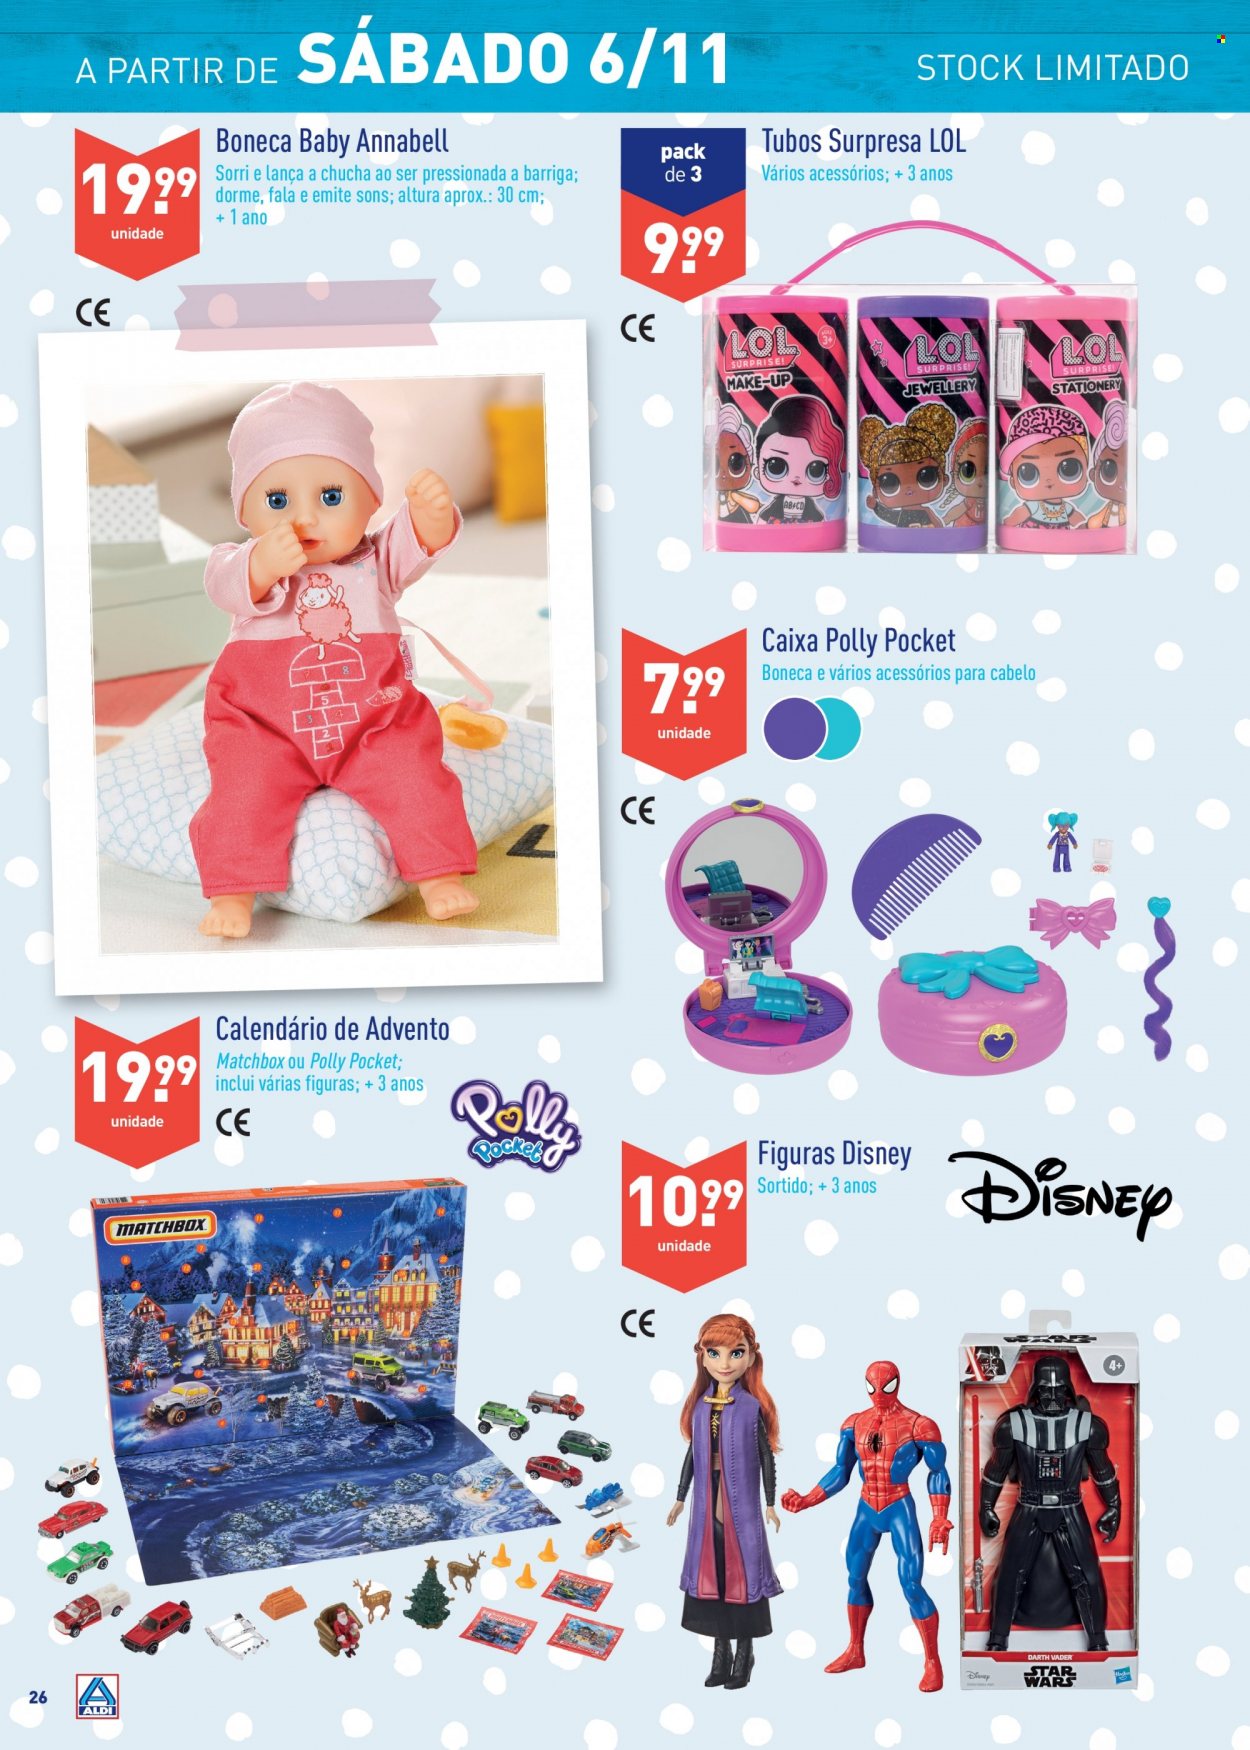 thumbnail - Folheto Aldi - 3.11.2021 - 9.11.2021 - Produtos em promoção - Disney, Baby Annabell, boneca, Polly Pocket. Página 26.